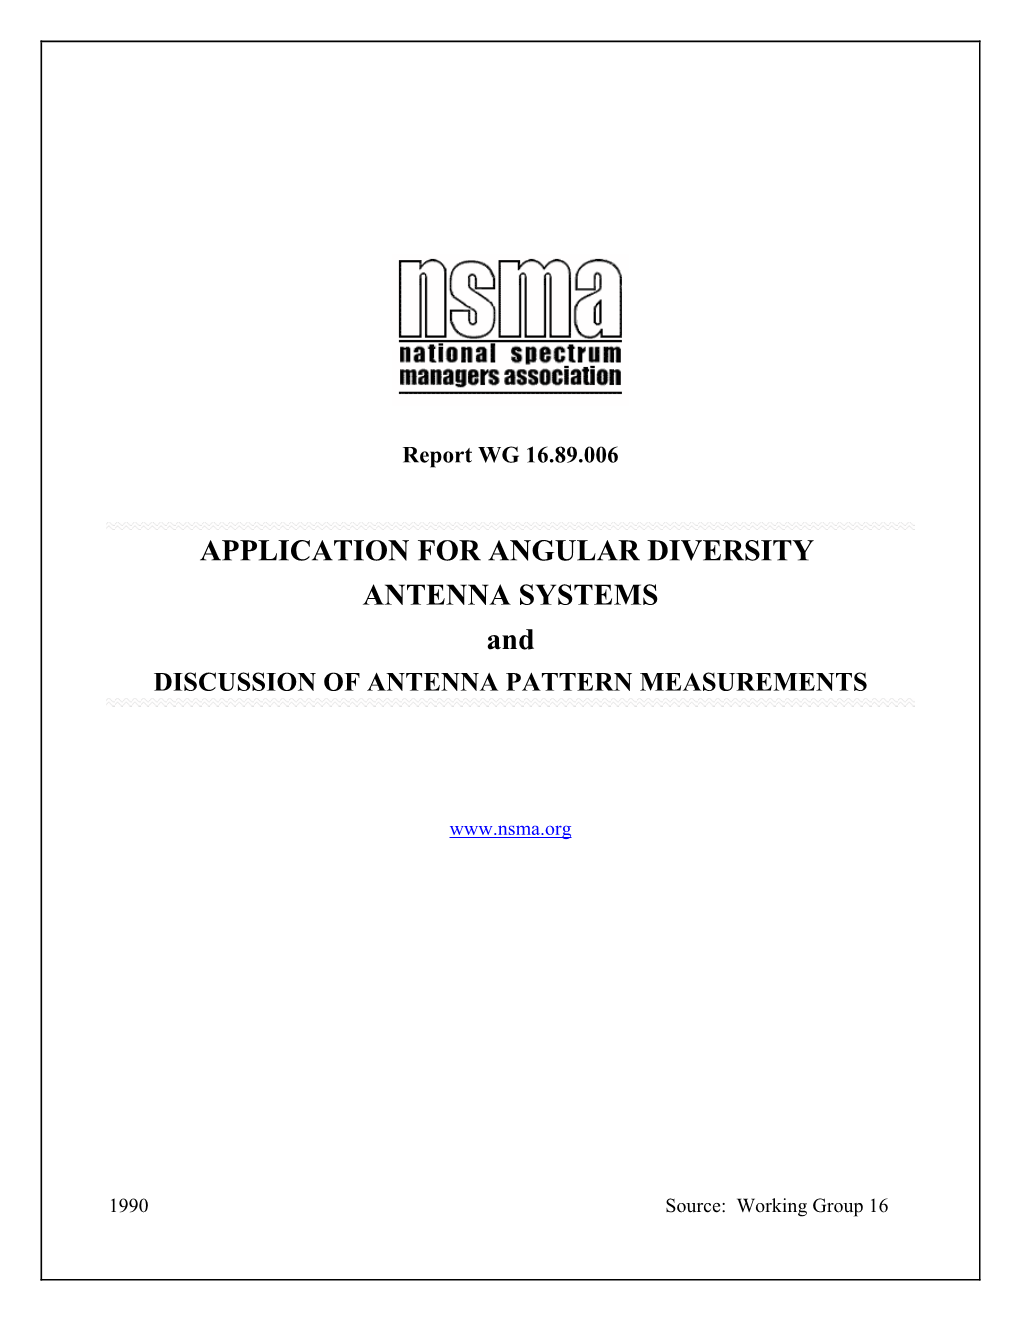 Angular Diversity / Antenna Pattern Measurements